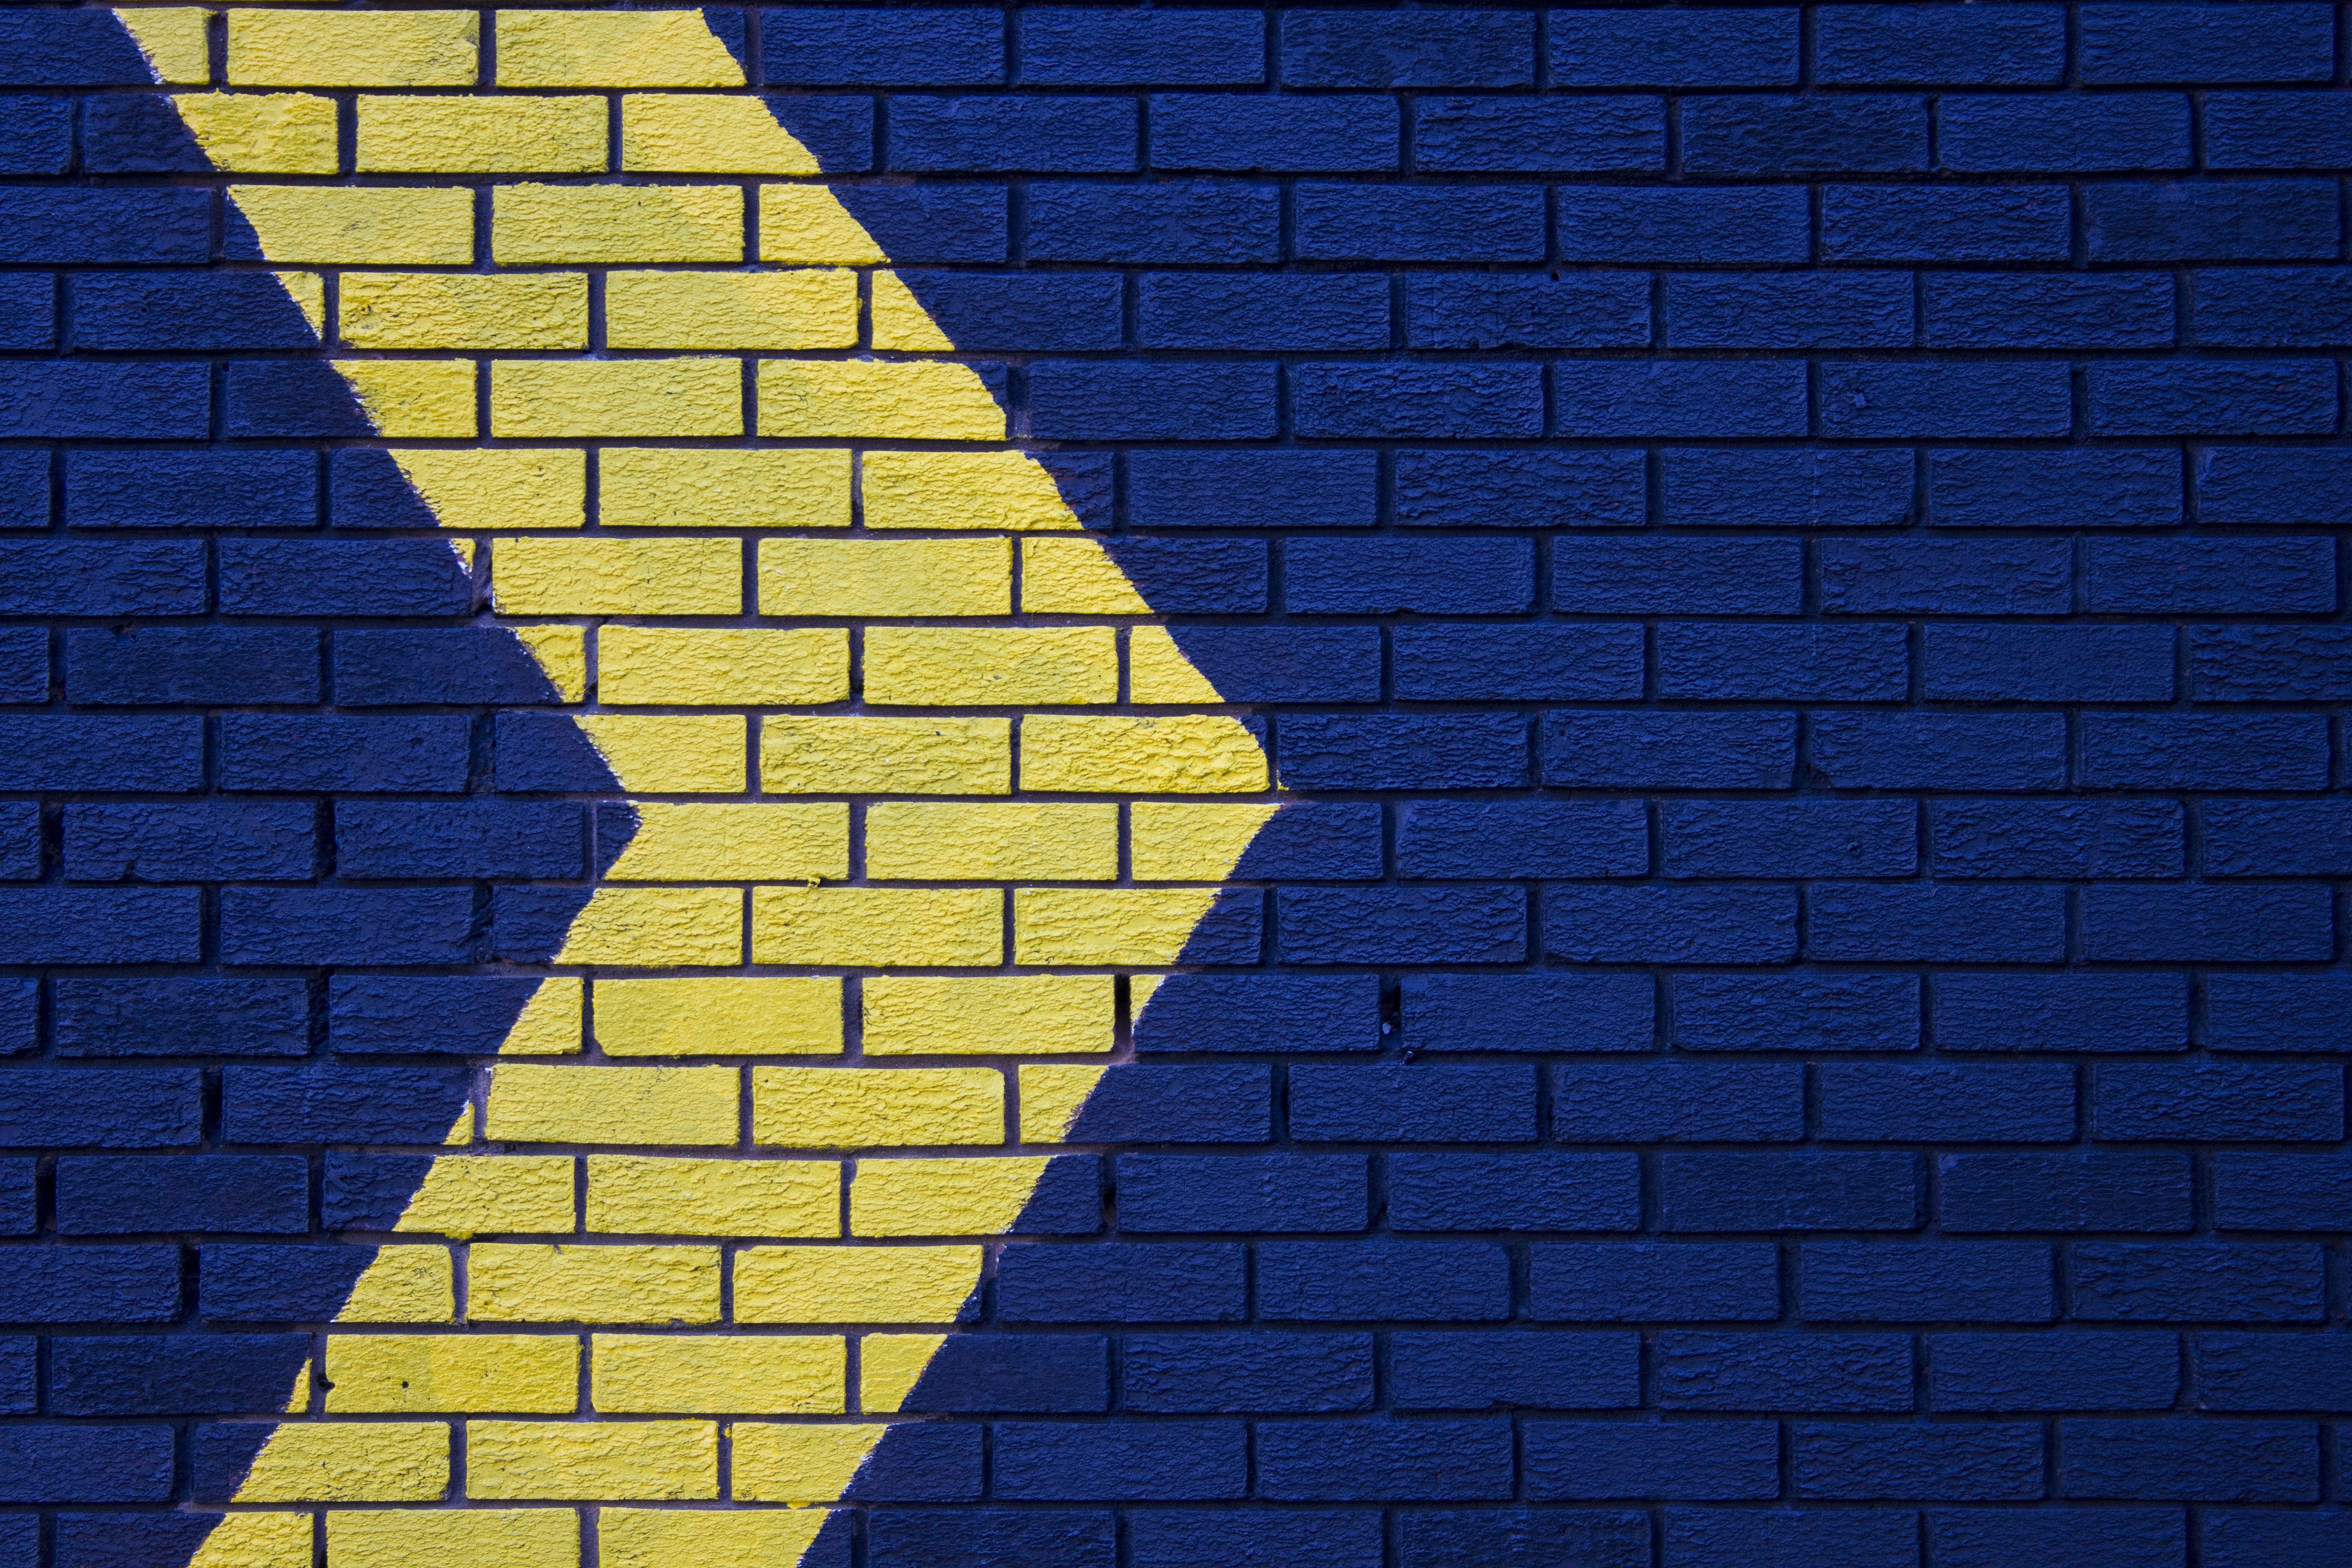 Blue Brick Background Images  Free Download on Freepik